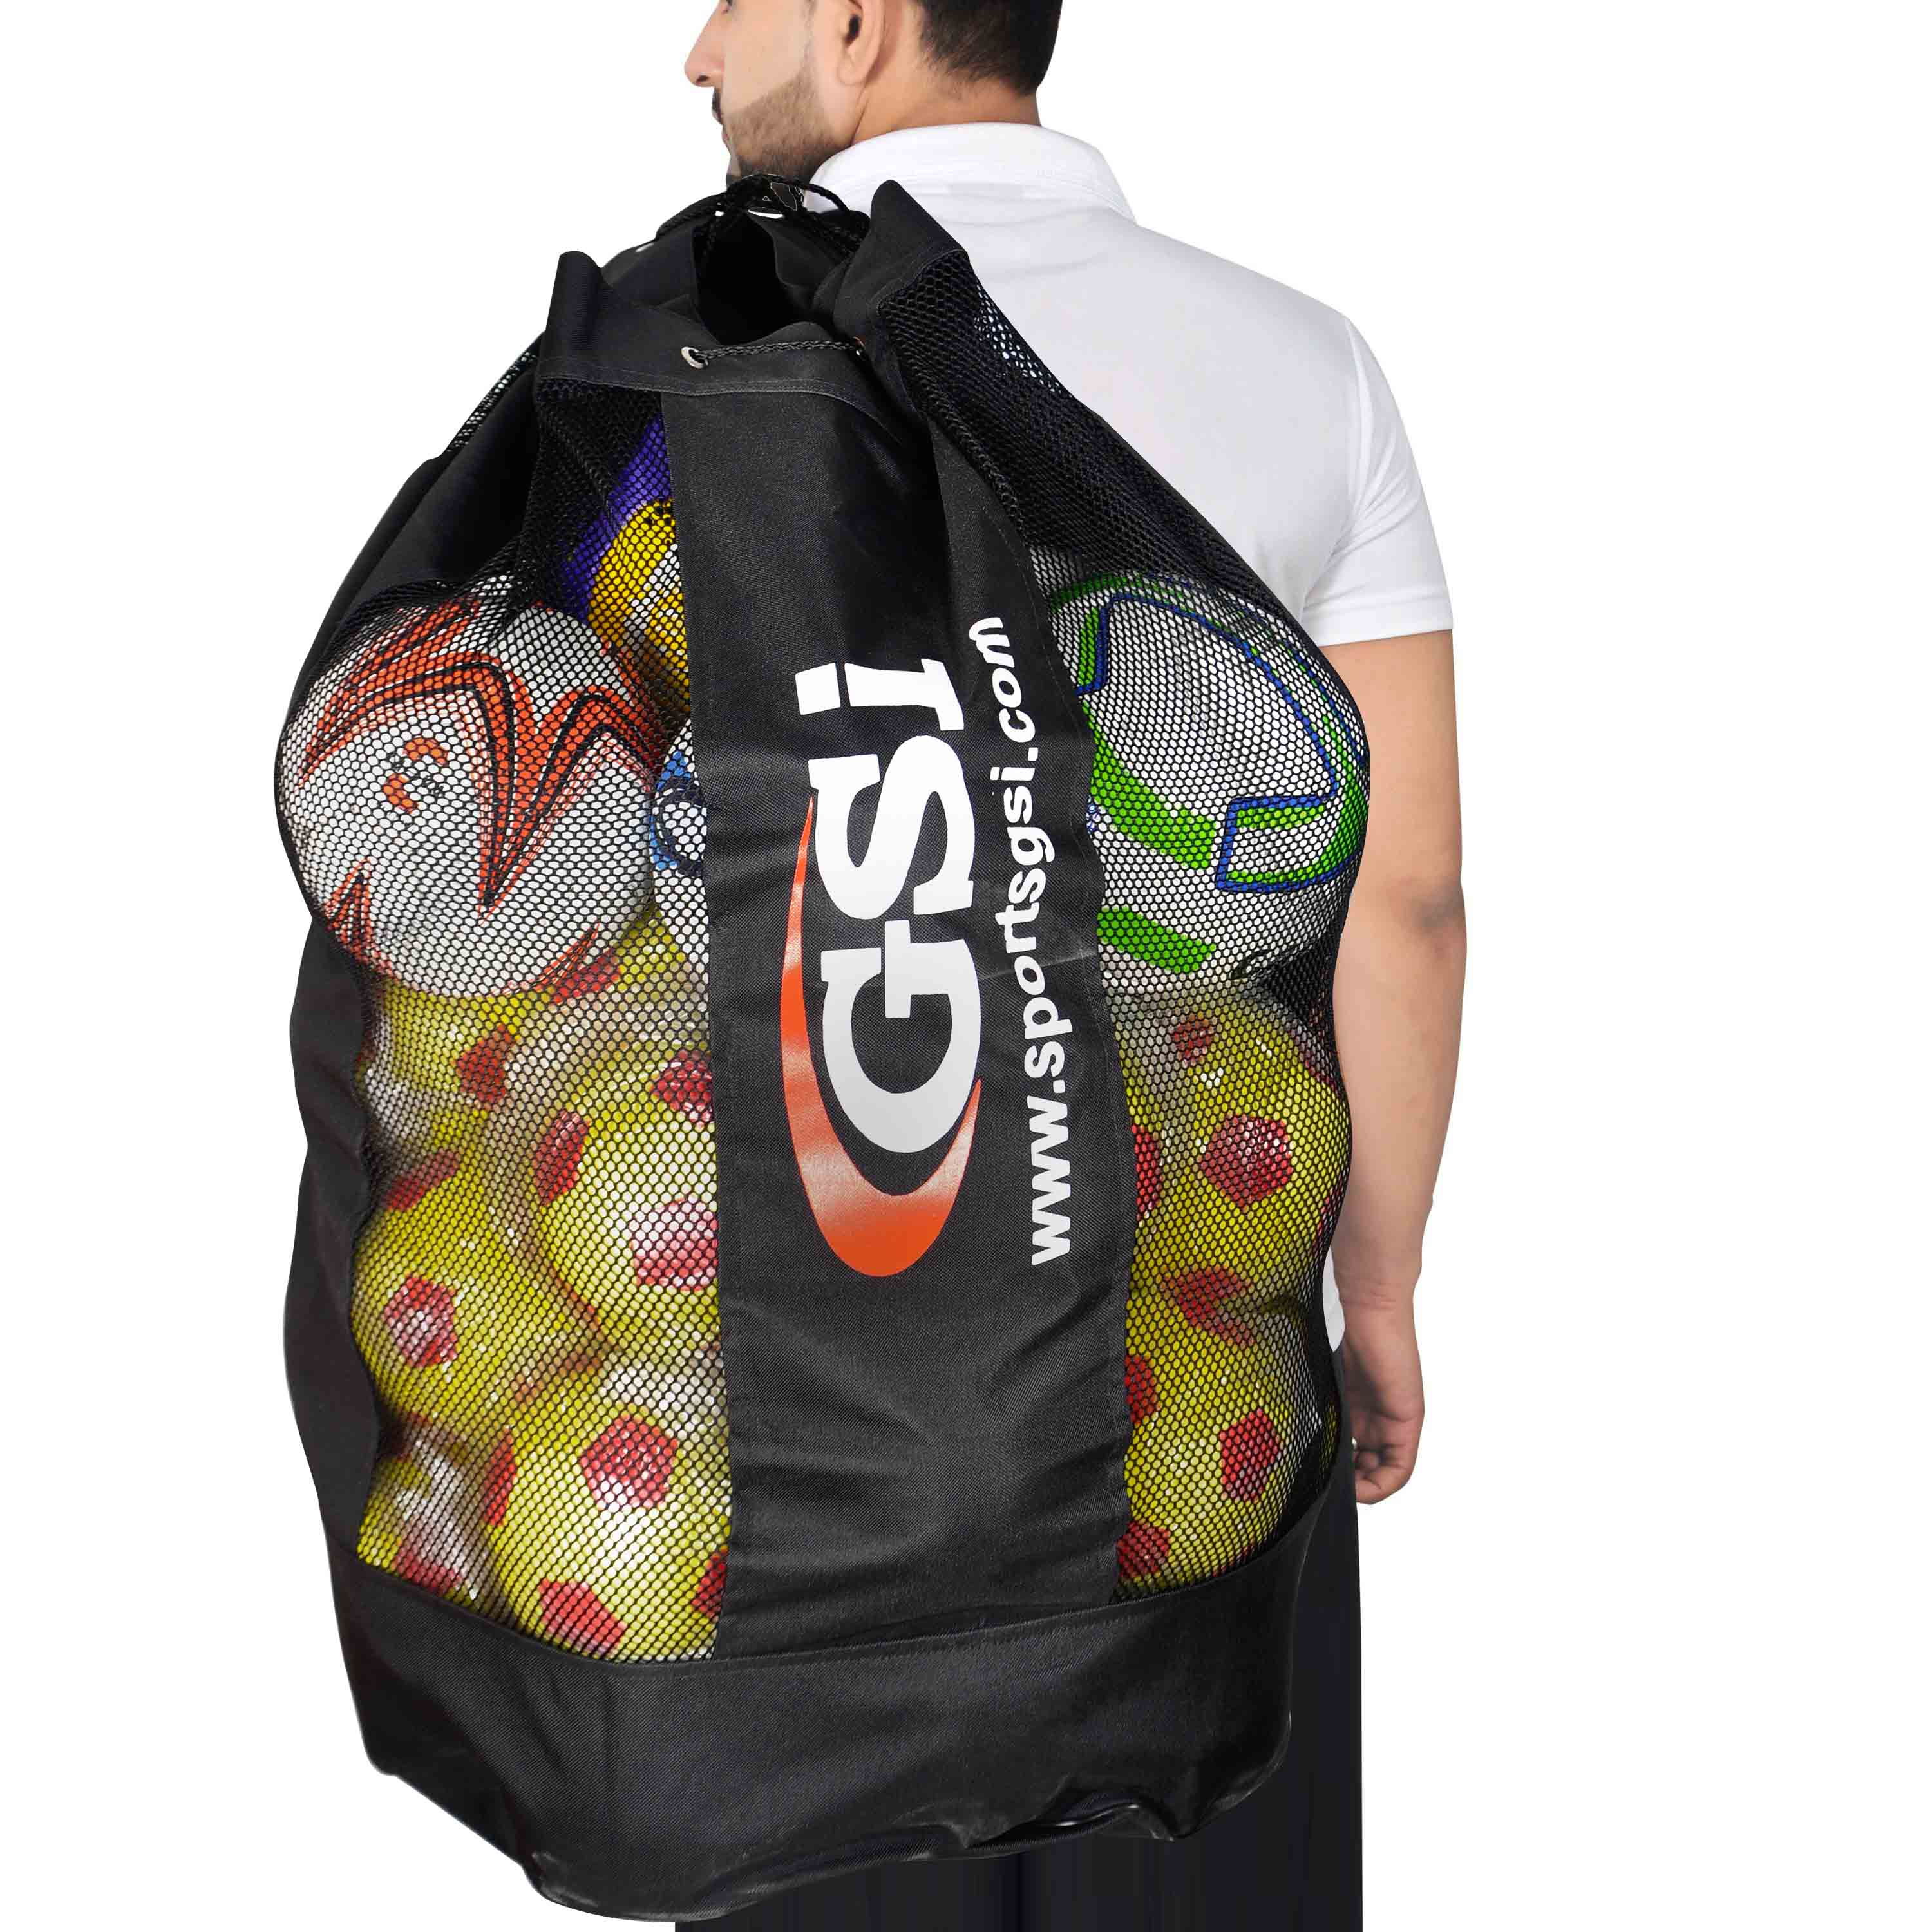 Jumbo Sports Multi Utility Bag with Adjustable Strap